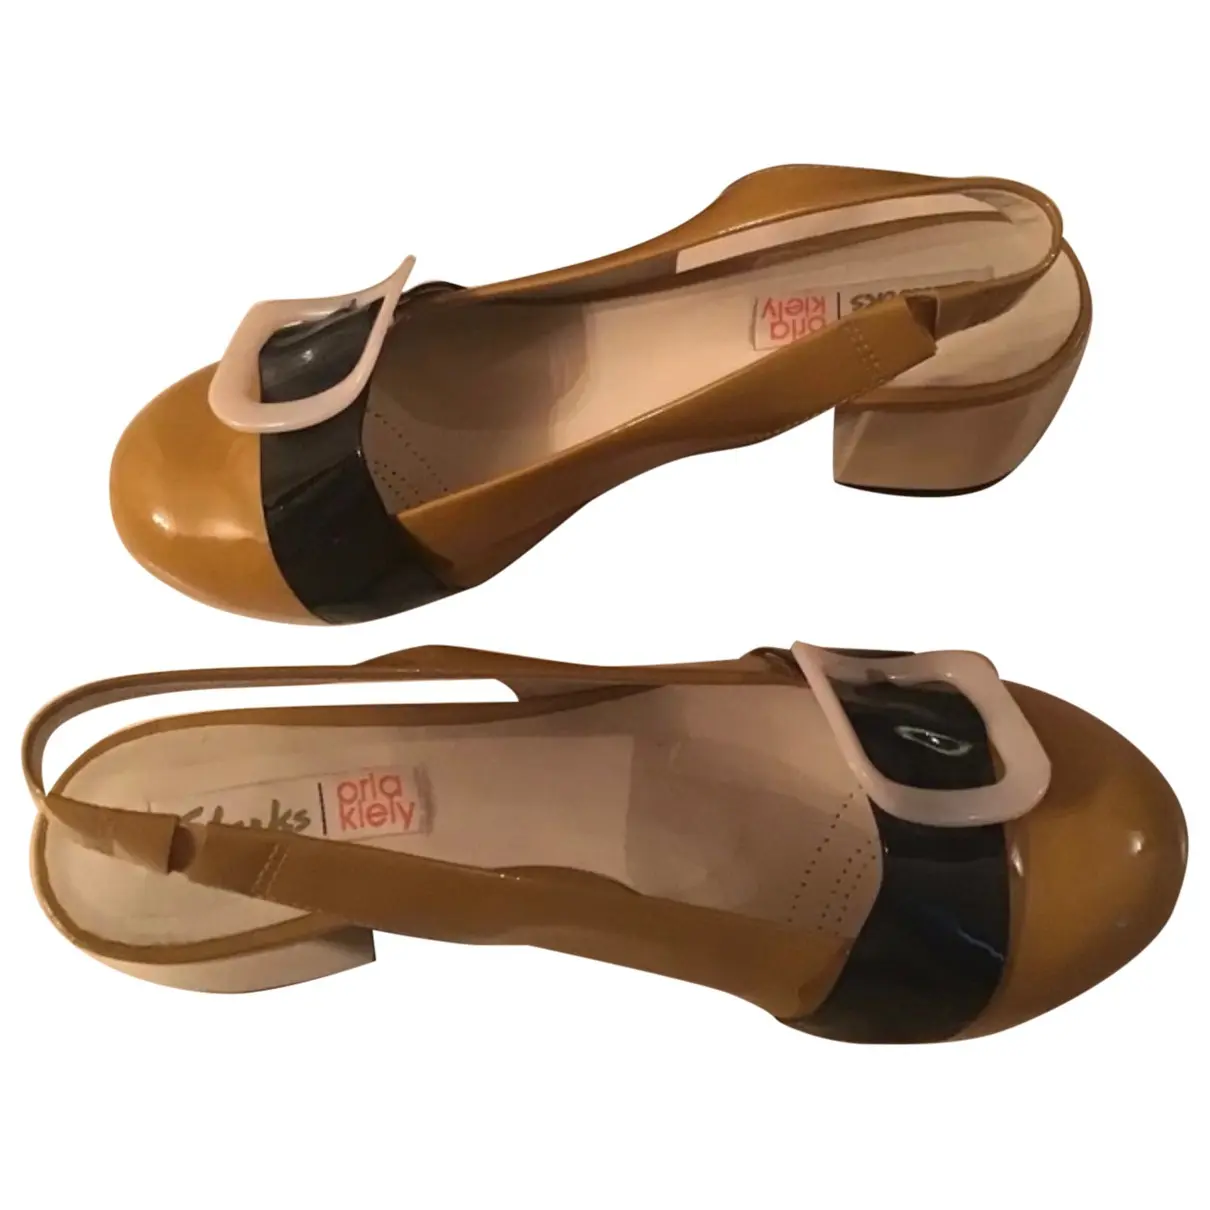 Patent leather heels Orla Kiely